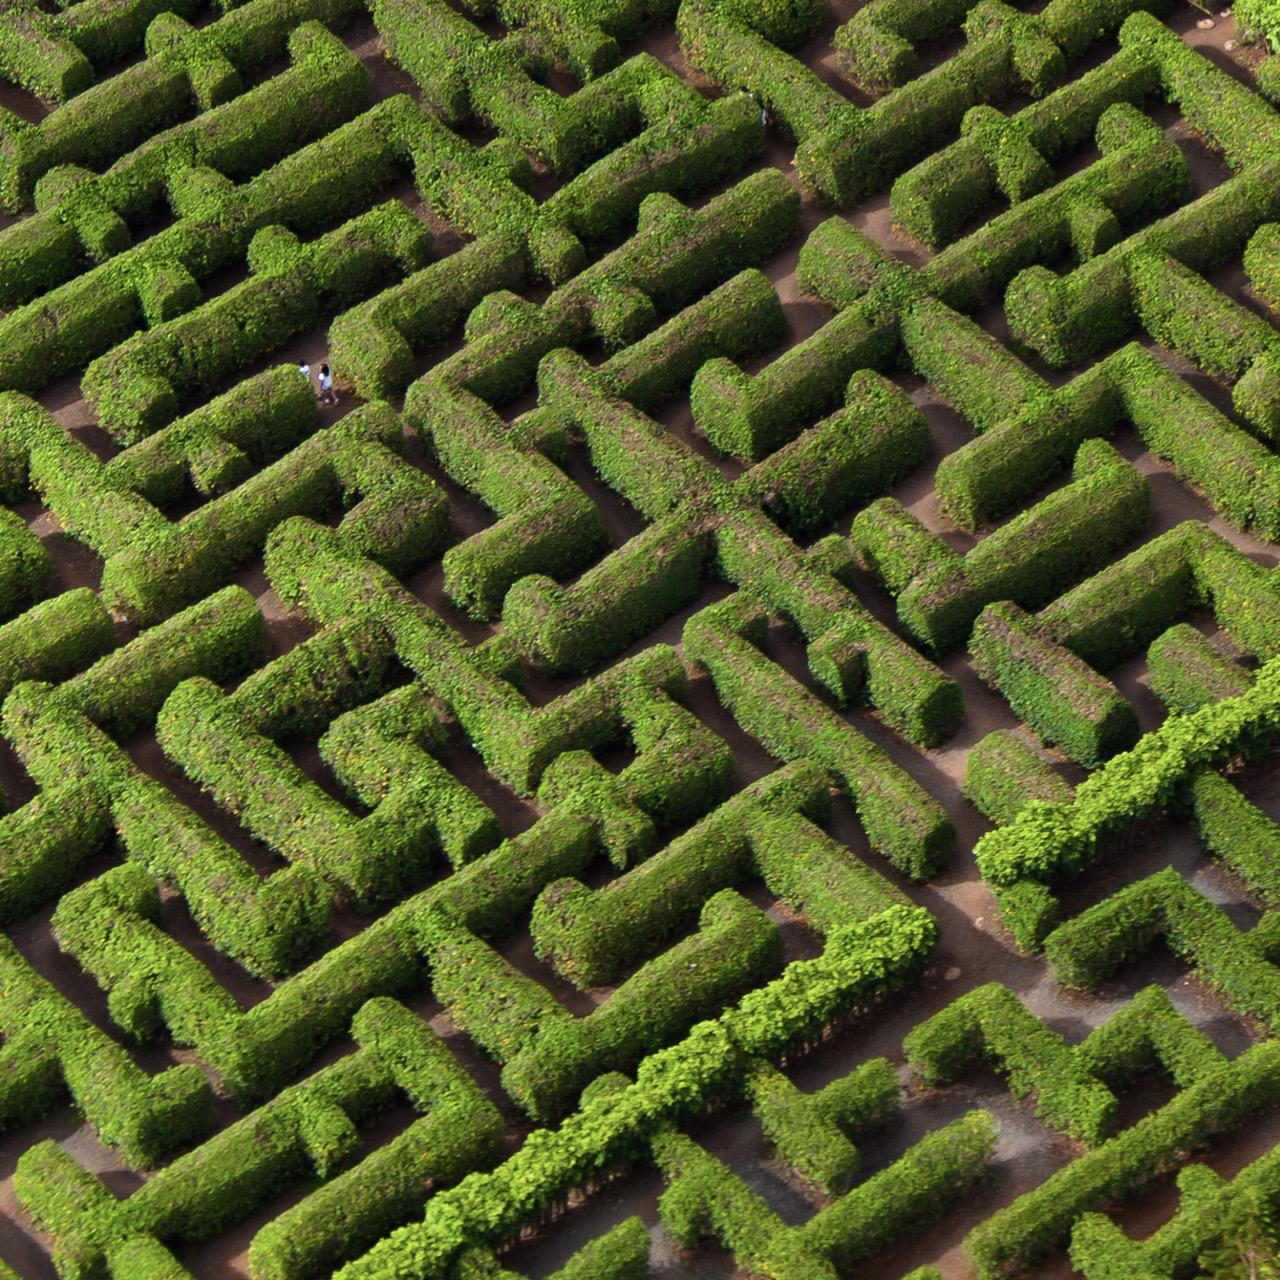 Pineapple Garden Maze - The World’s Largest Maze